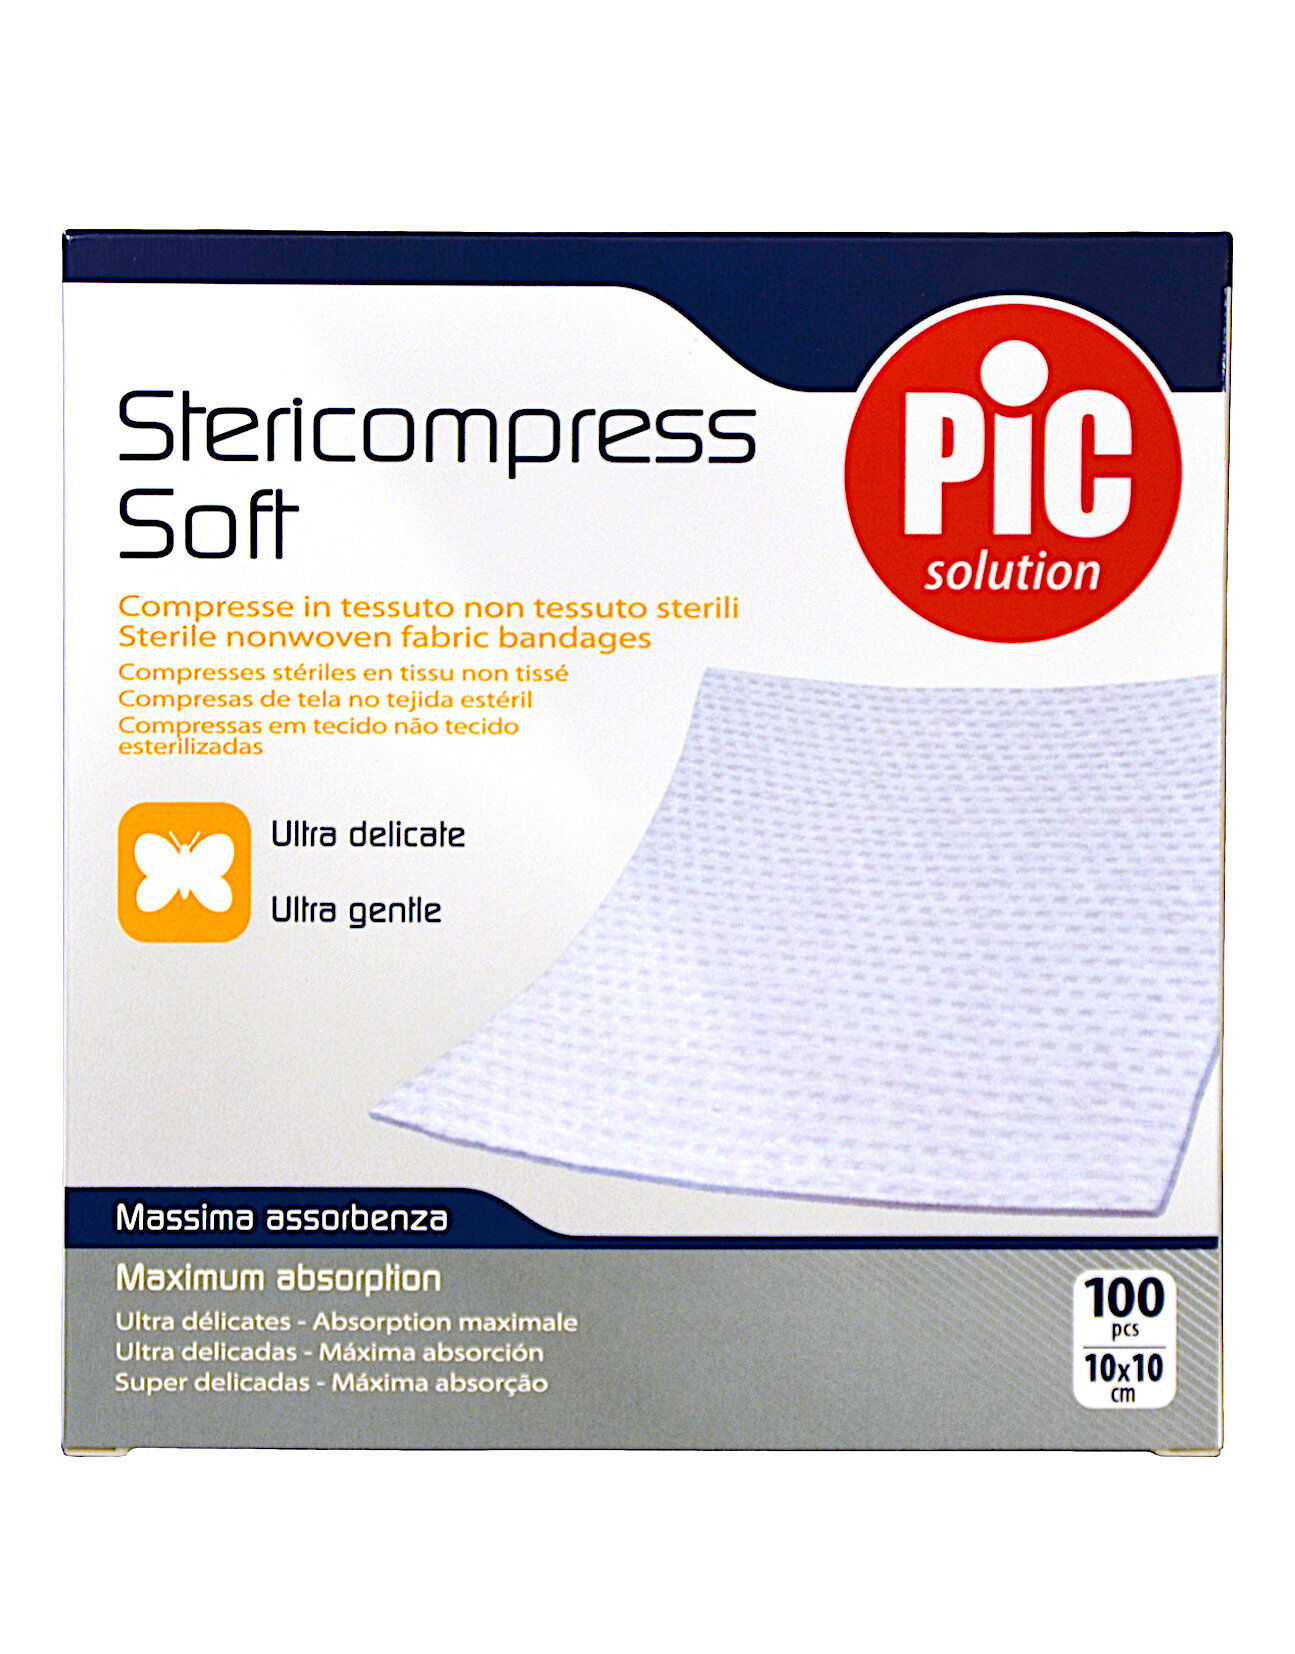 PIC Stericompress Soft Compresse In Tessuto Sterile 100 Pcs 10x10cm